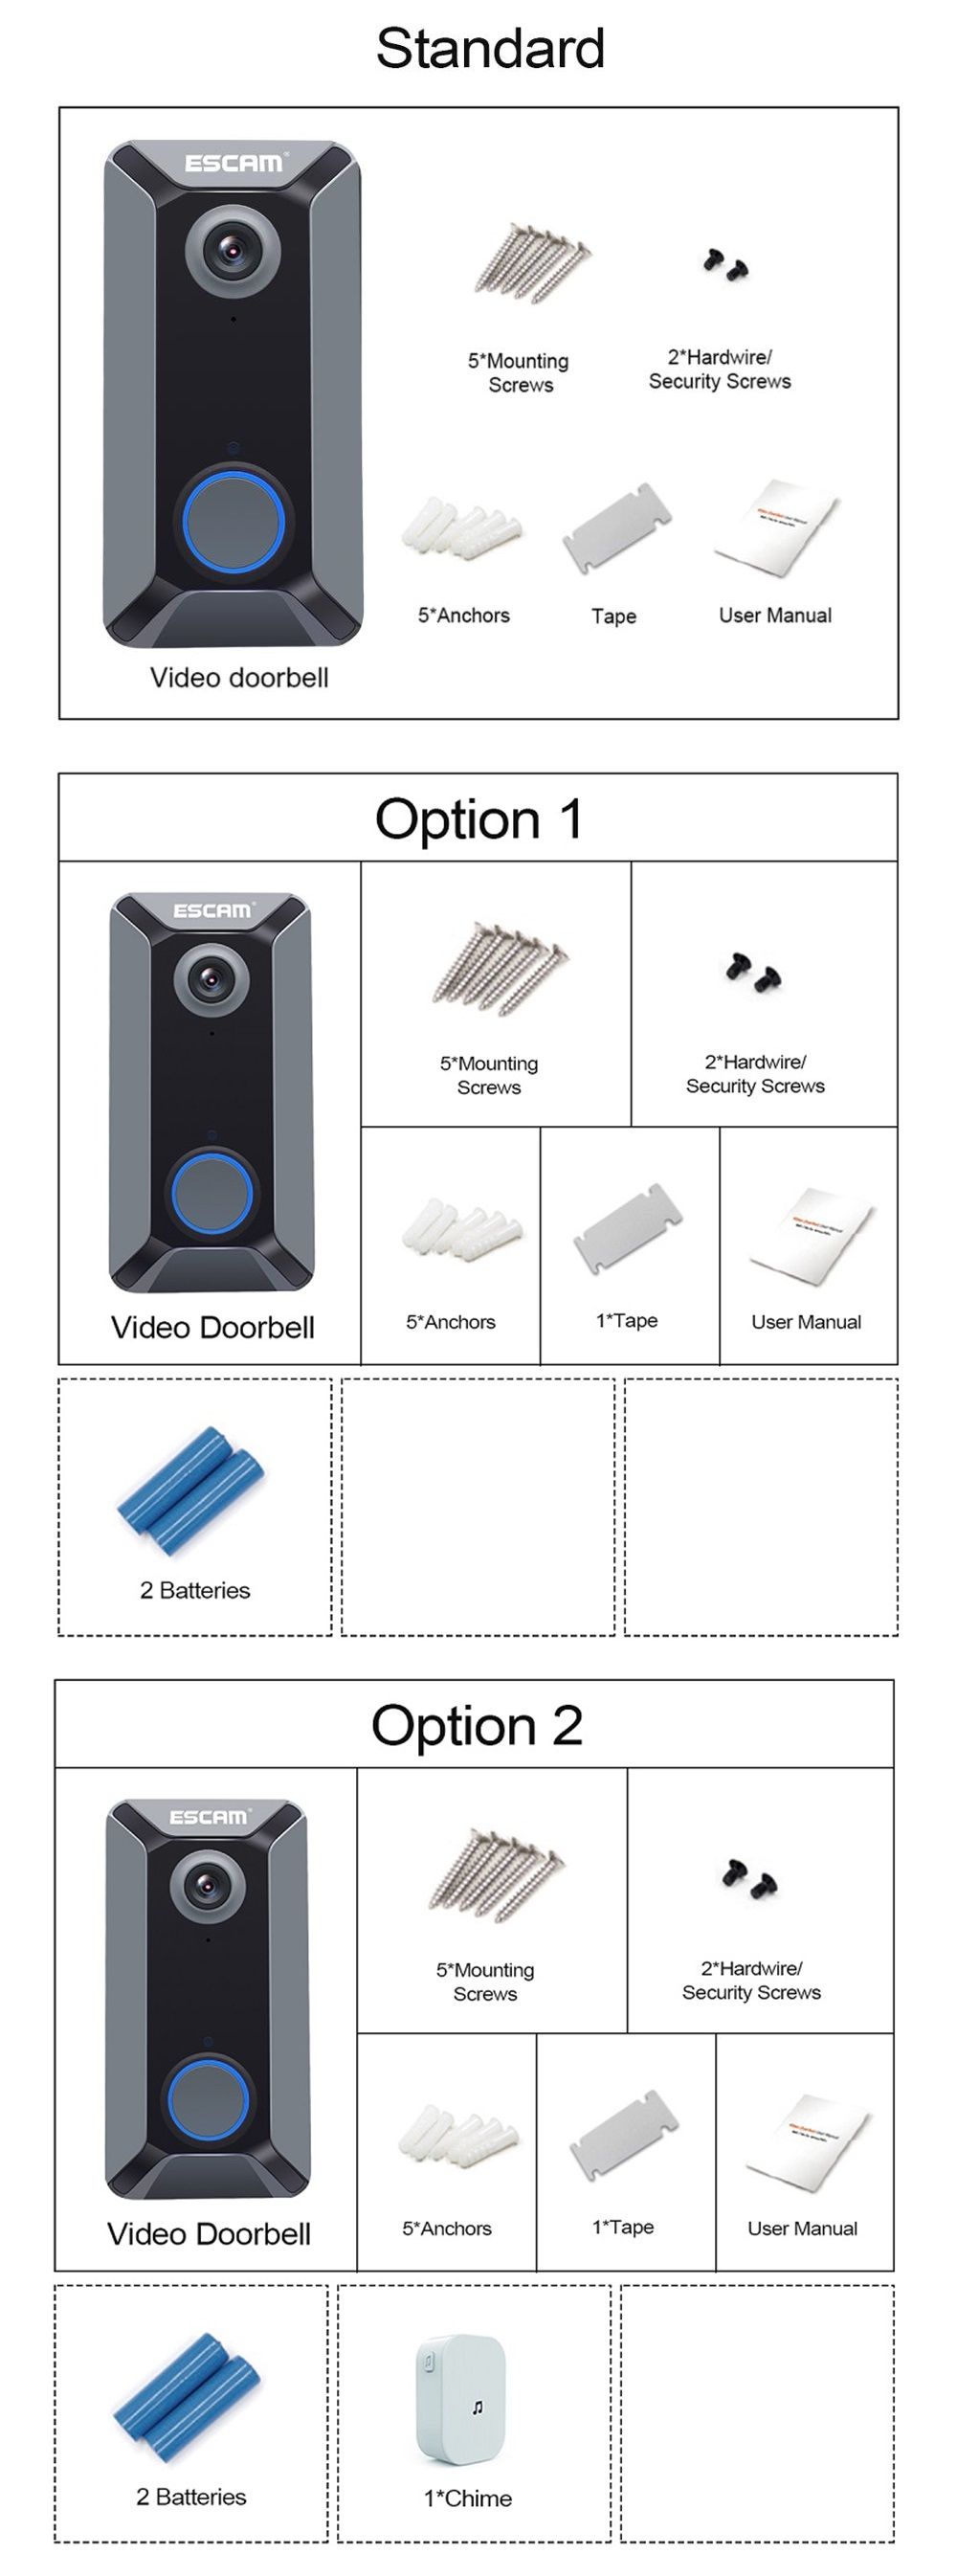 ESCAM-V6-720P-Wireless-Battery-Video-Doorbell-IR-Camera-Free-Cloud-Storage-Waterproof-140-Degree-Vie-1548870